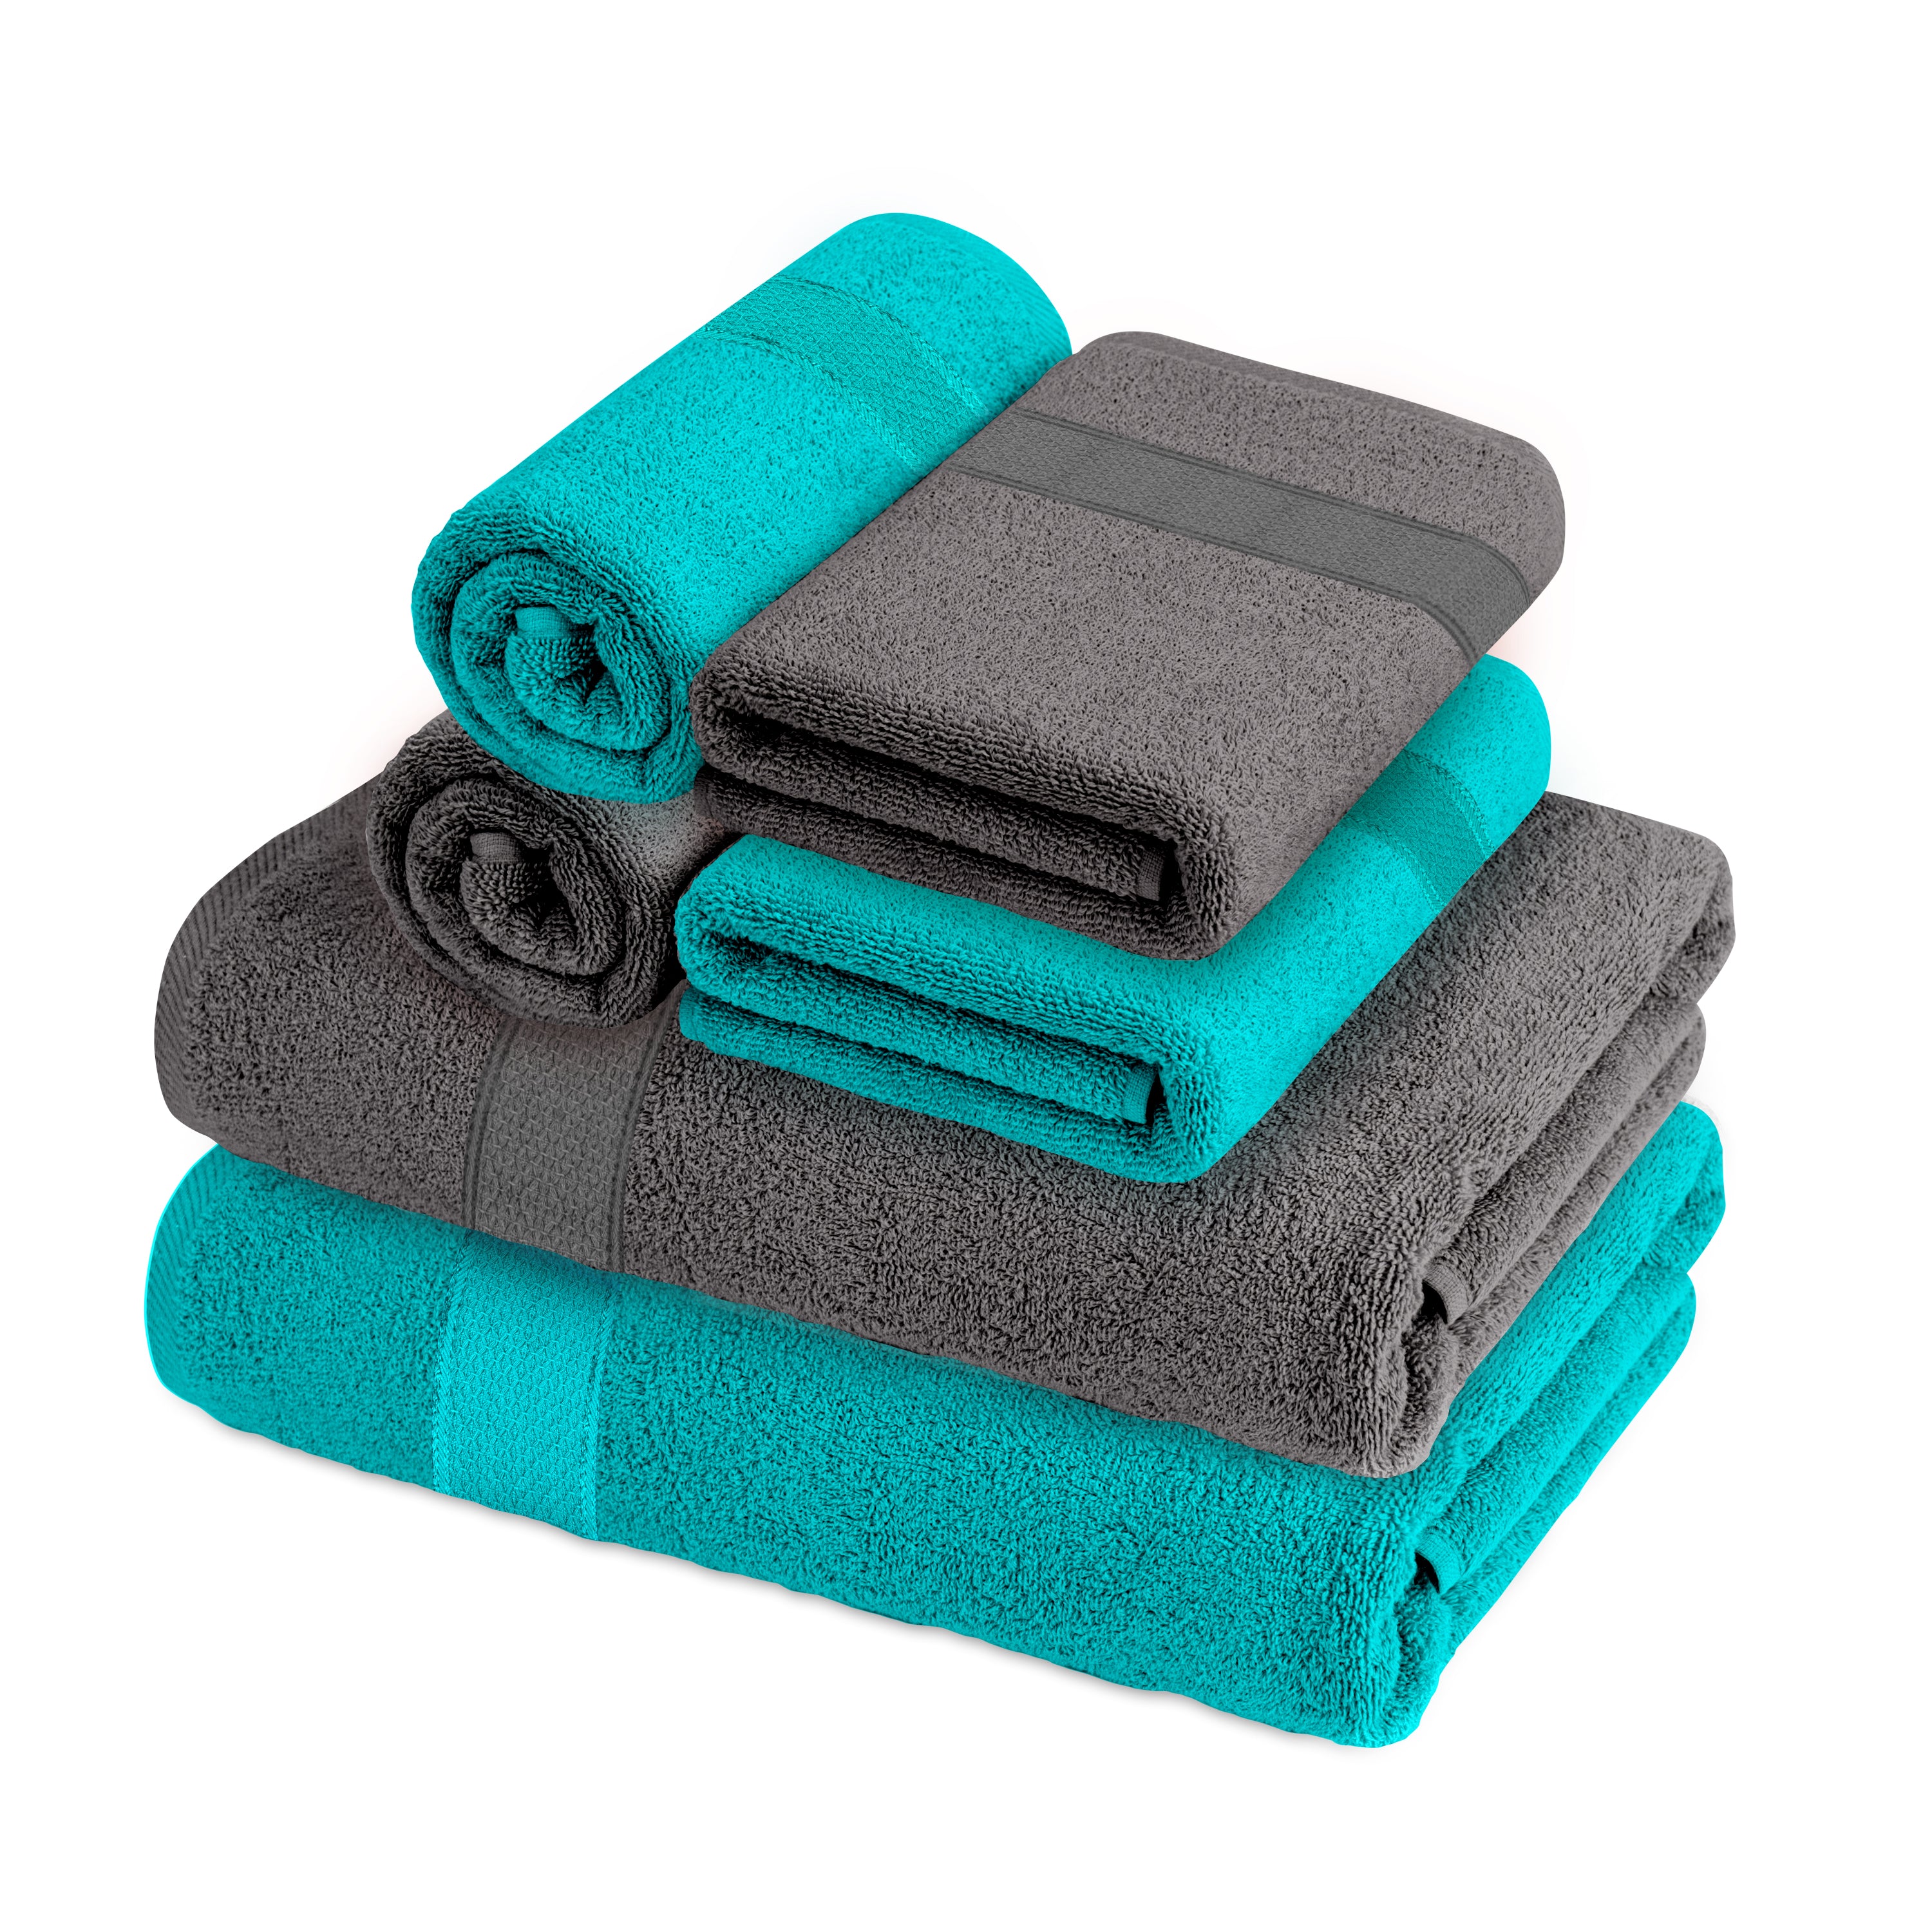 Aquacado 2 Pc Bath & 4 Pc Hand Towel Set of 6 Charcoal Grey & Turq Blue